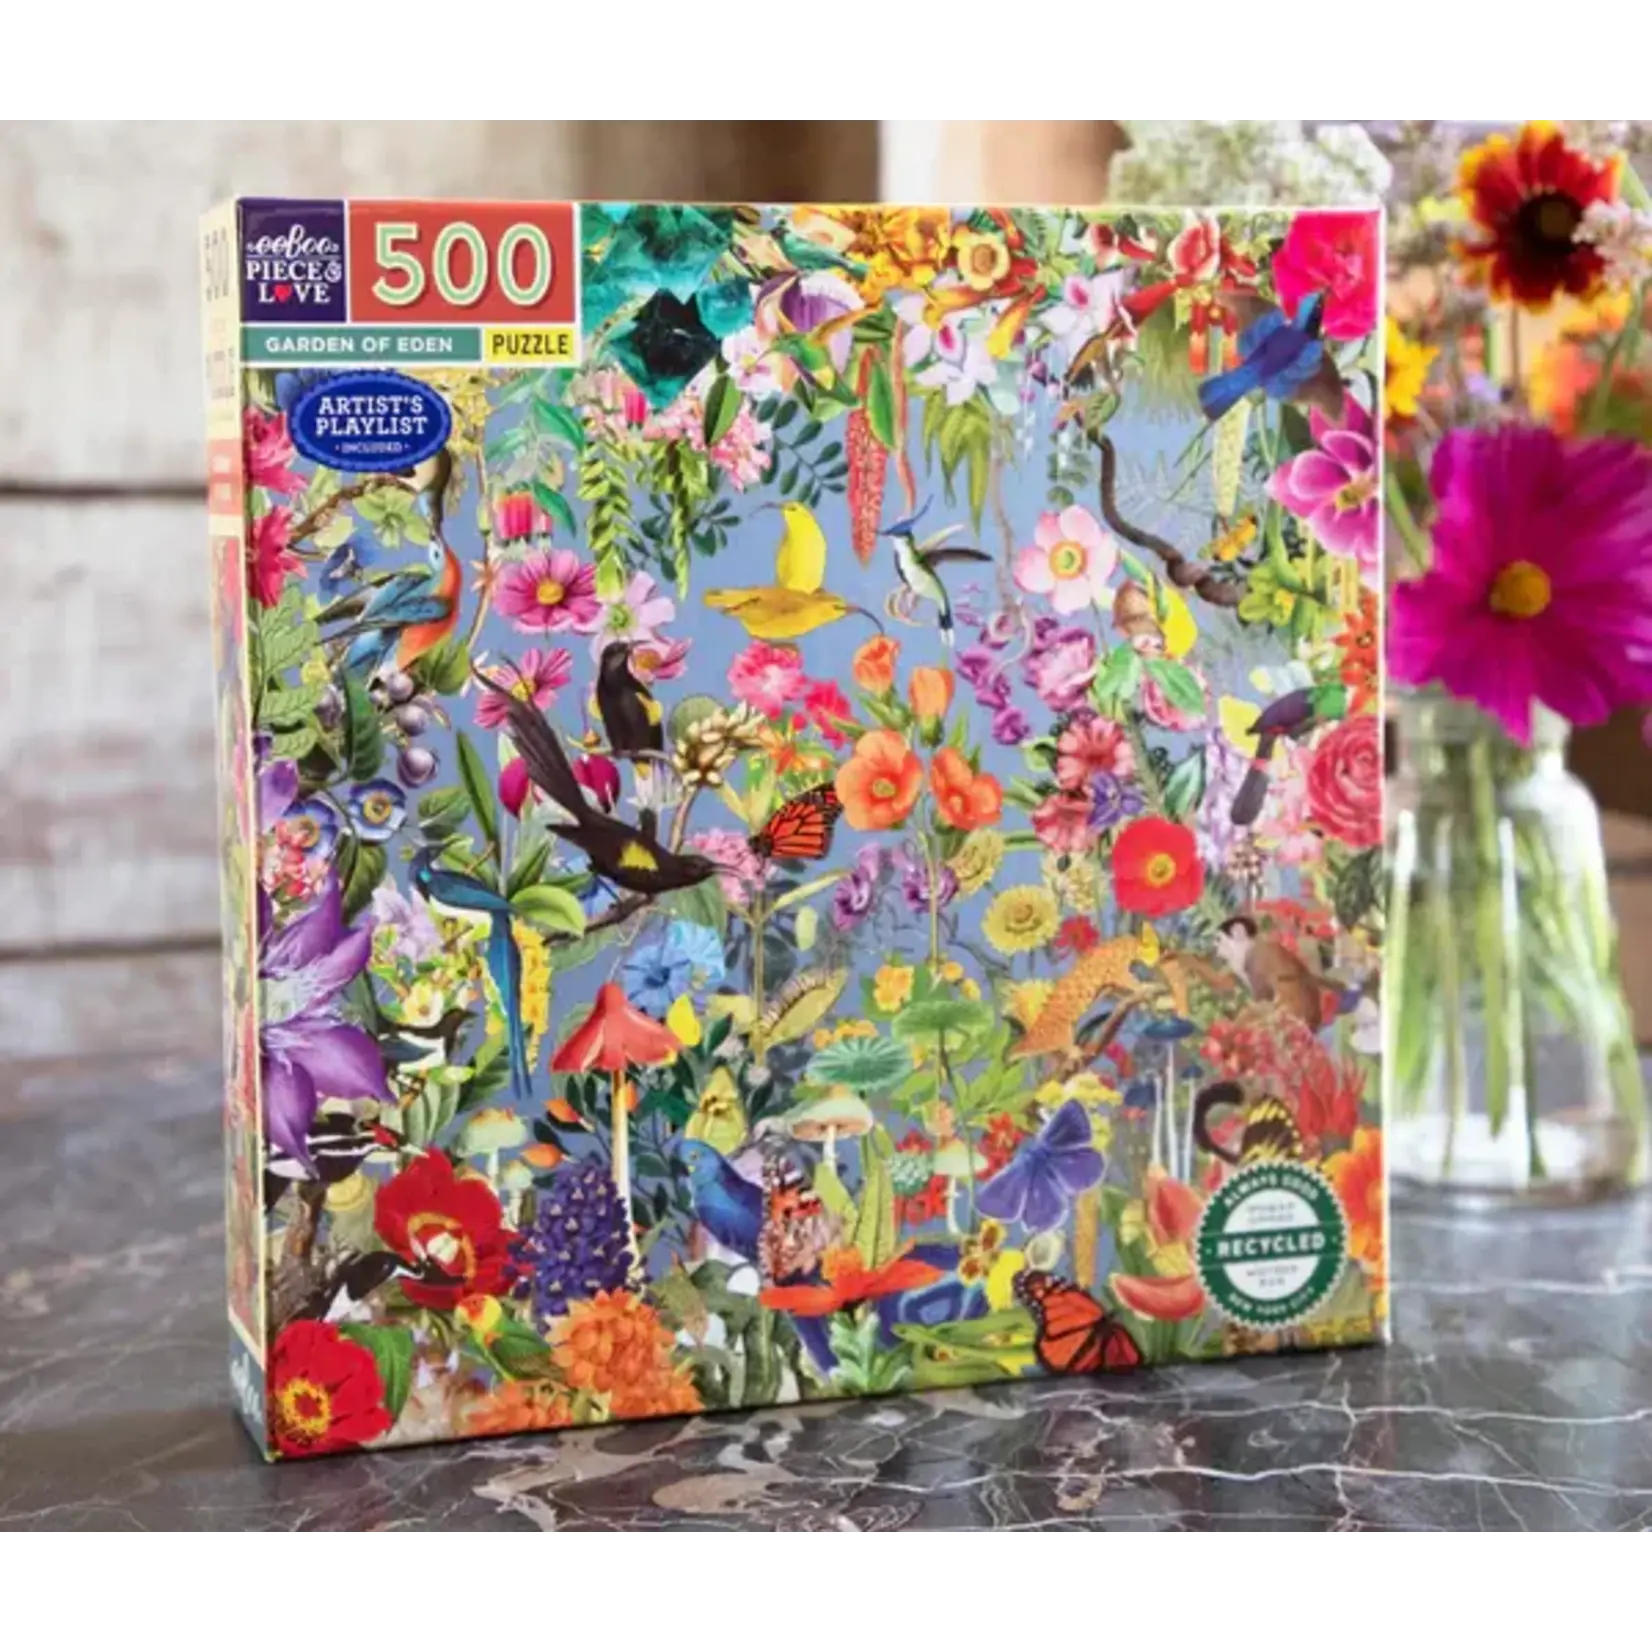 Garden of Eden 500 Piece Square Adult Jigsaw Puzzle